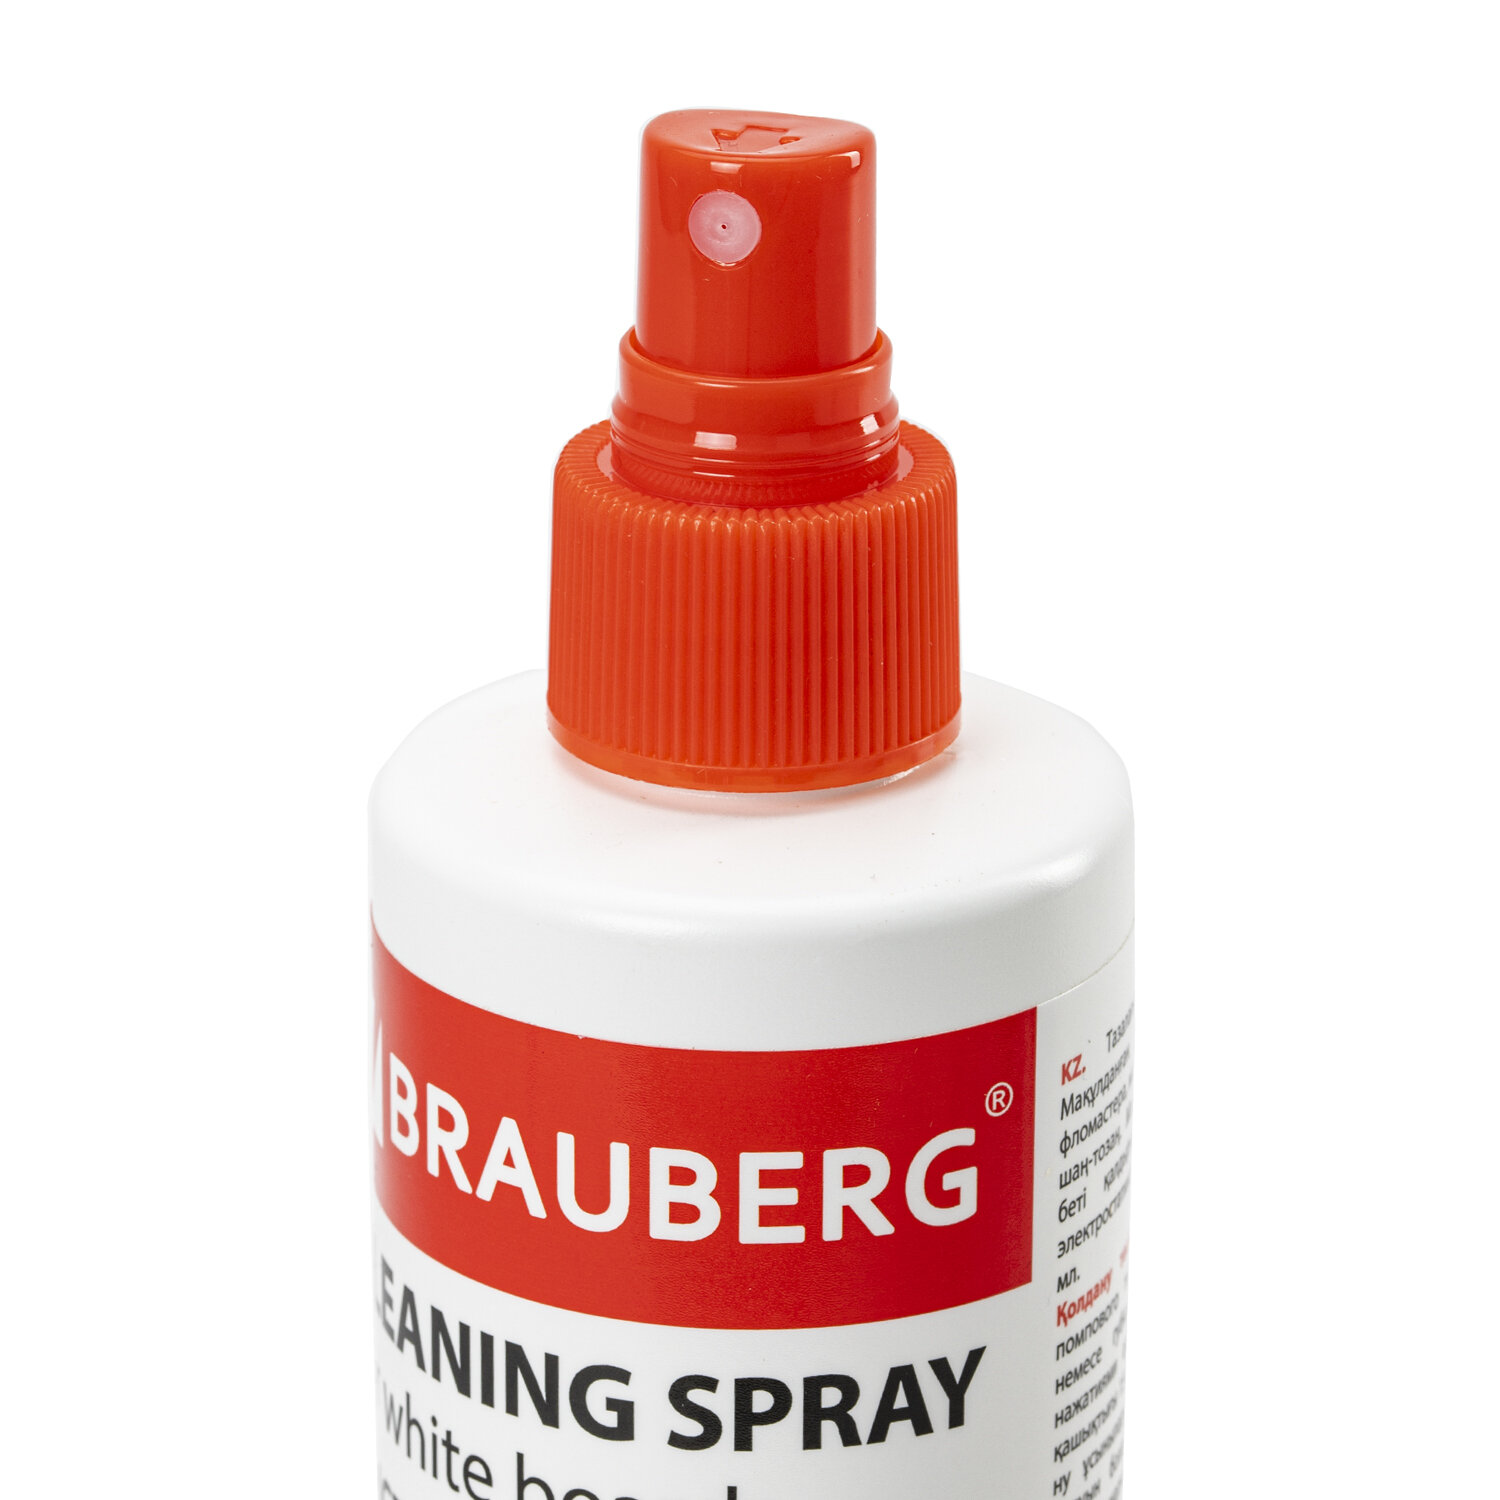 Чистящая жидкость-спрей BRAUBERG "White board Clean" 250 мл для маркерных досок 510119